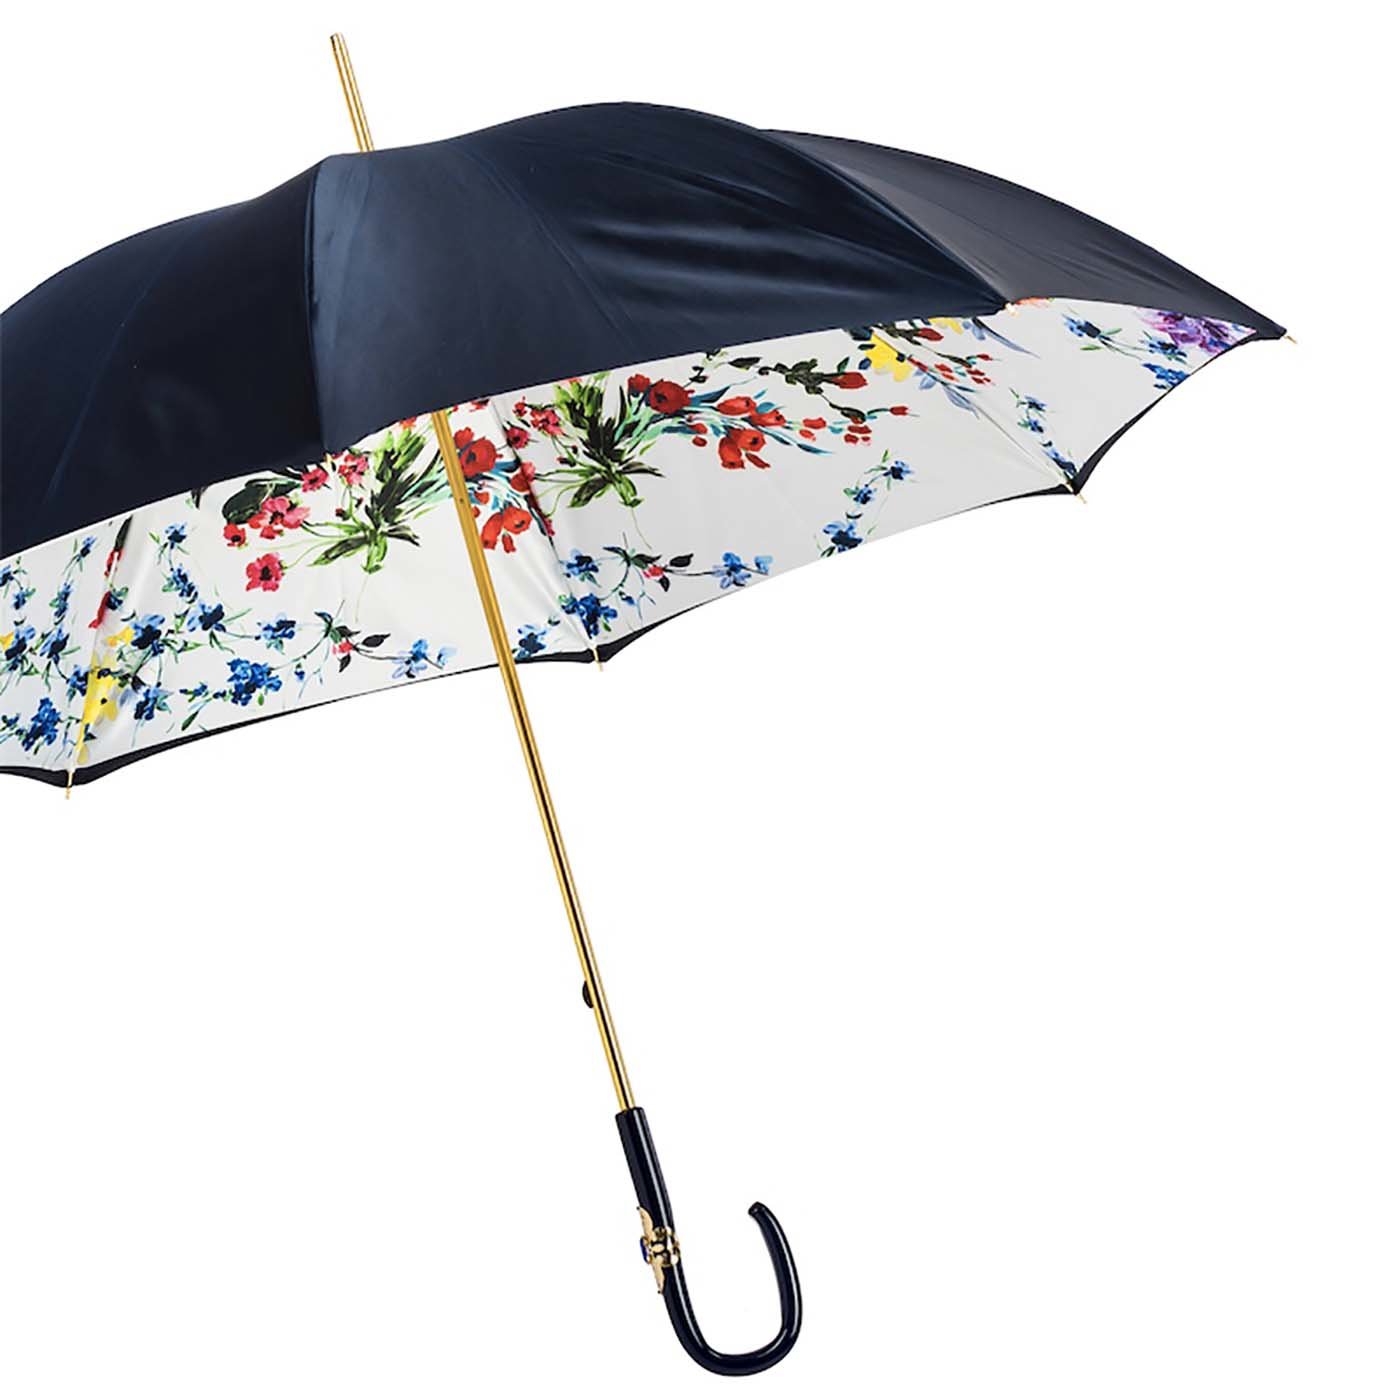 Navy Umbrella with Flowers - Alternative view 1